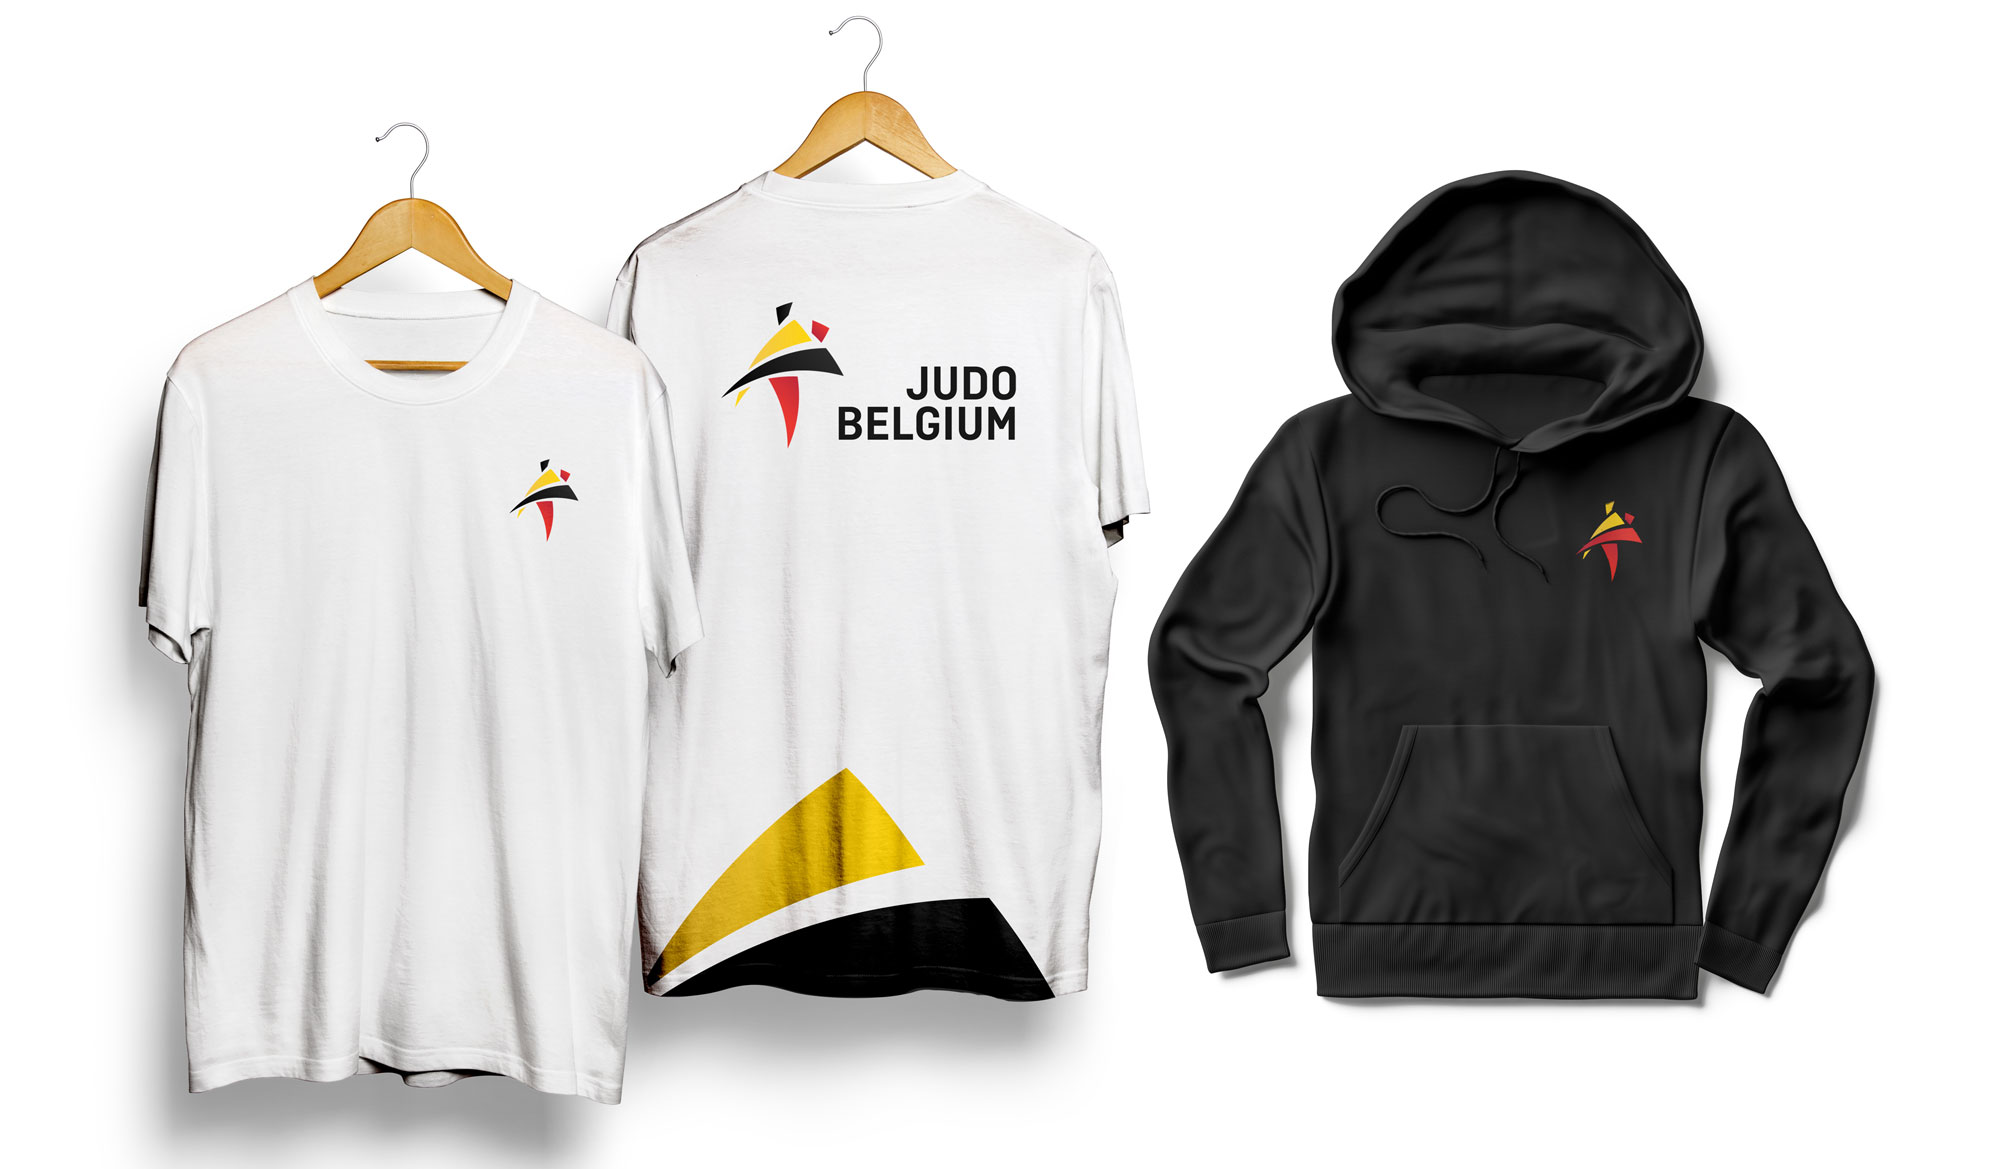 Judo Belgium | Branding | Veaudeville Marketing